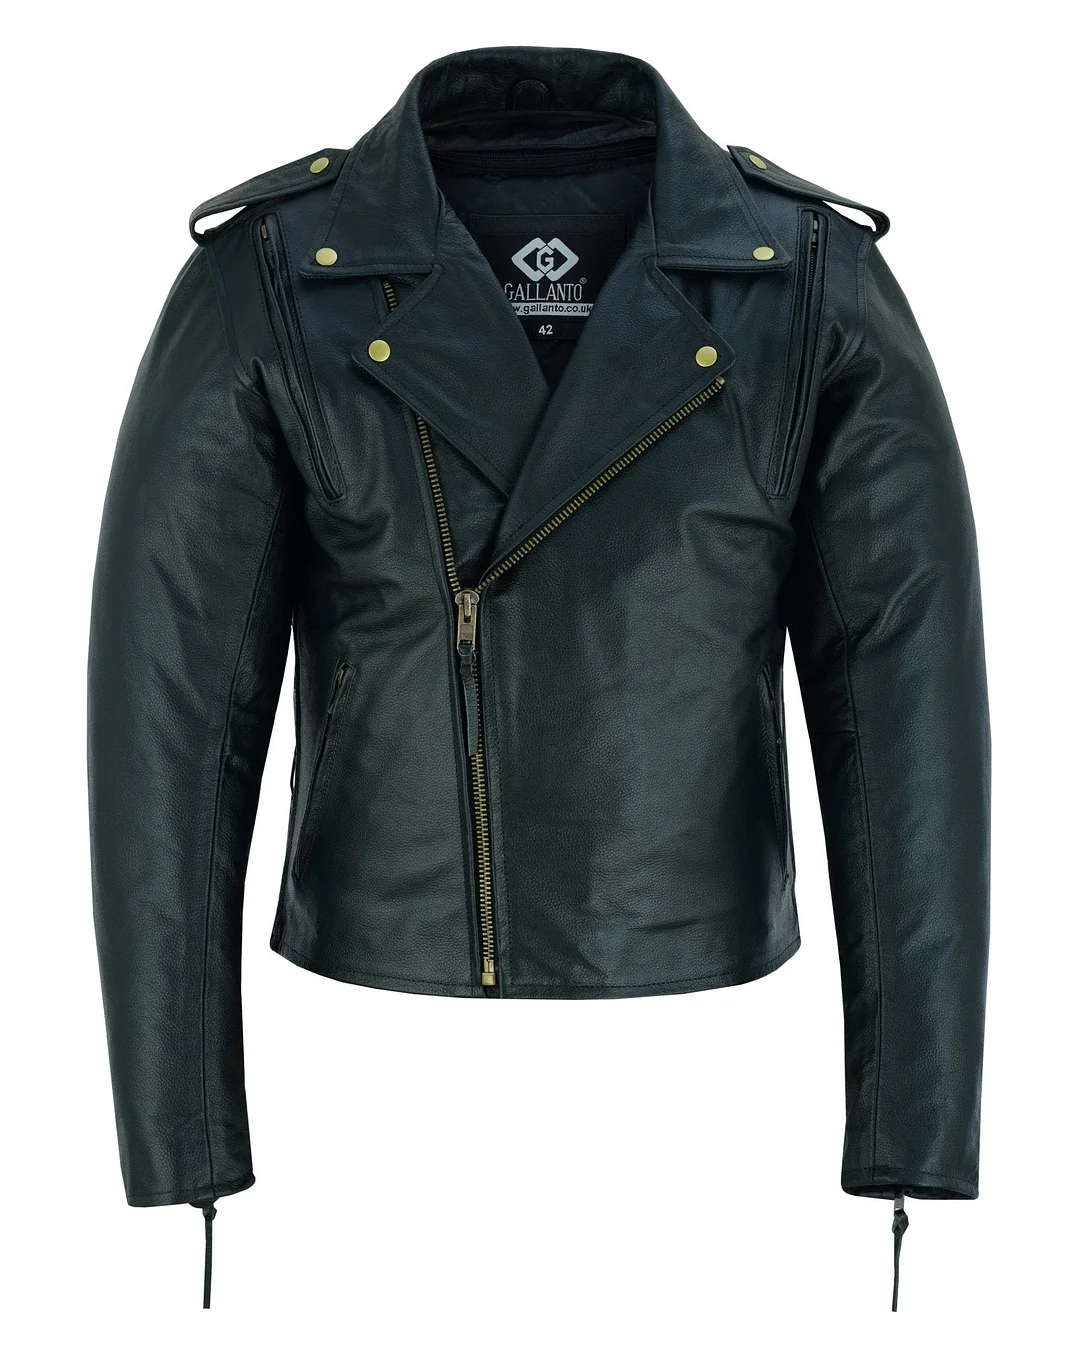 Men's Cool Rider Black Vented Premium Leather Motorcycle Jacket